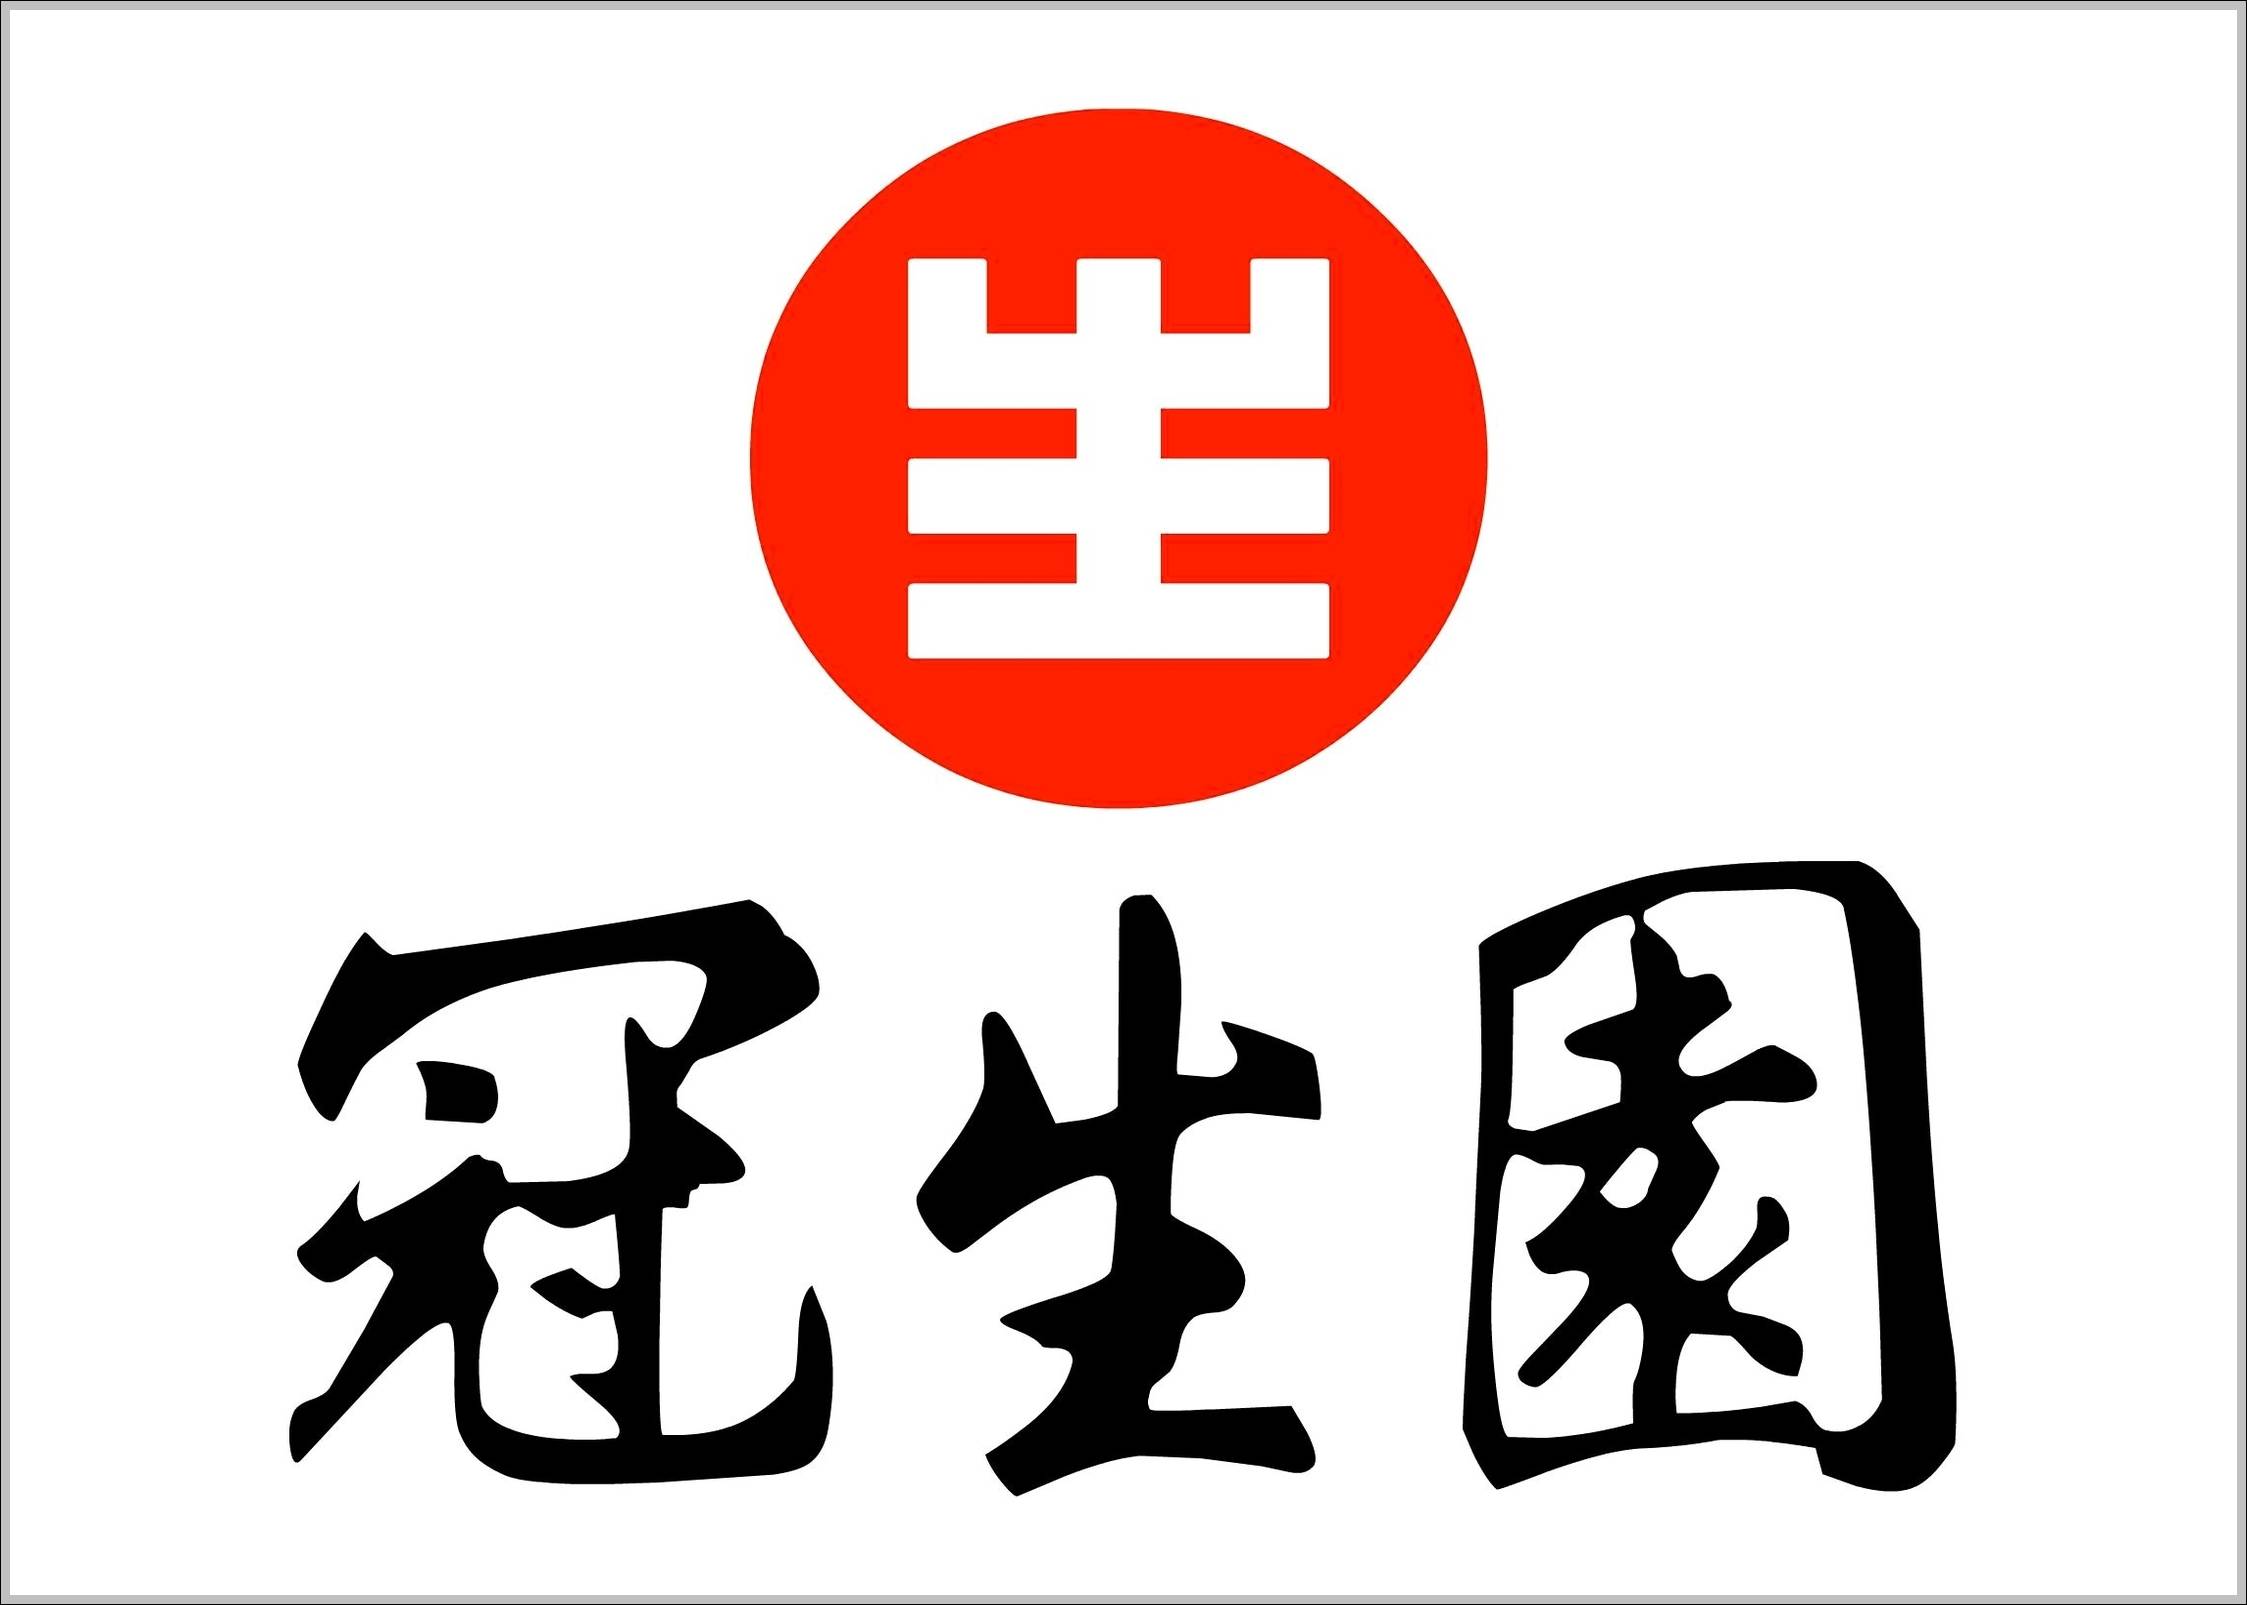 Gsy Group logo